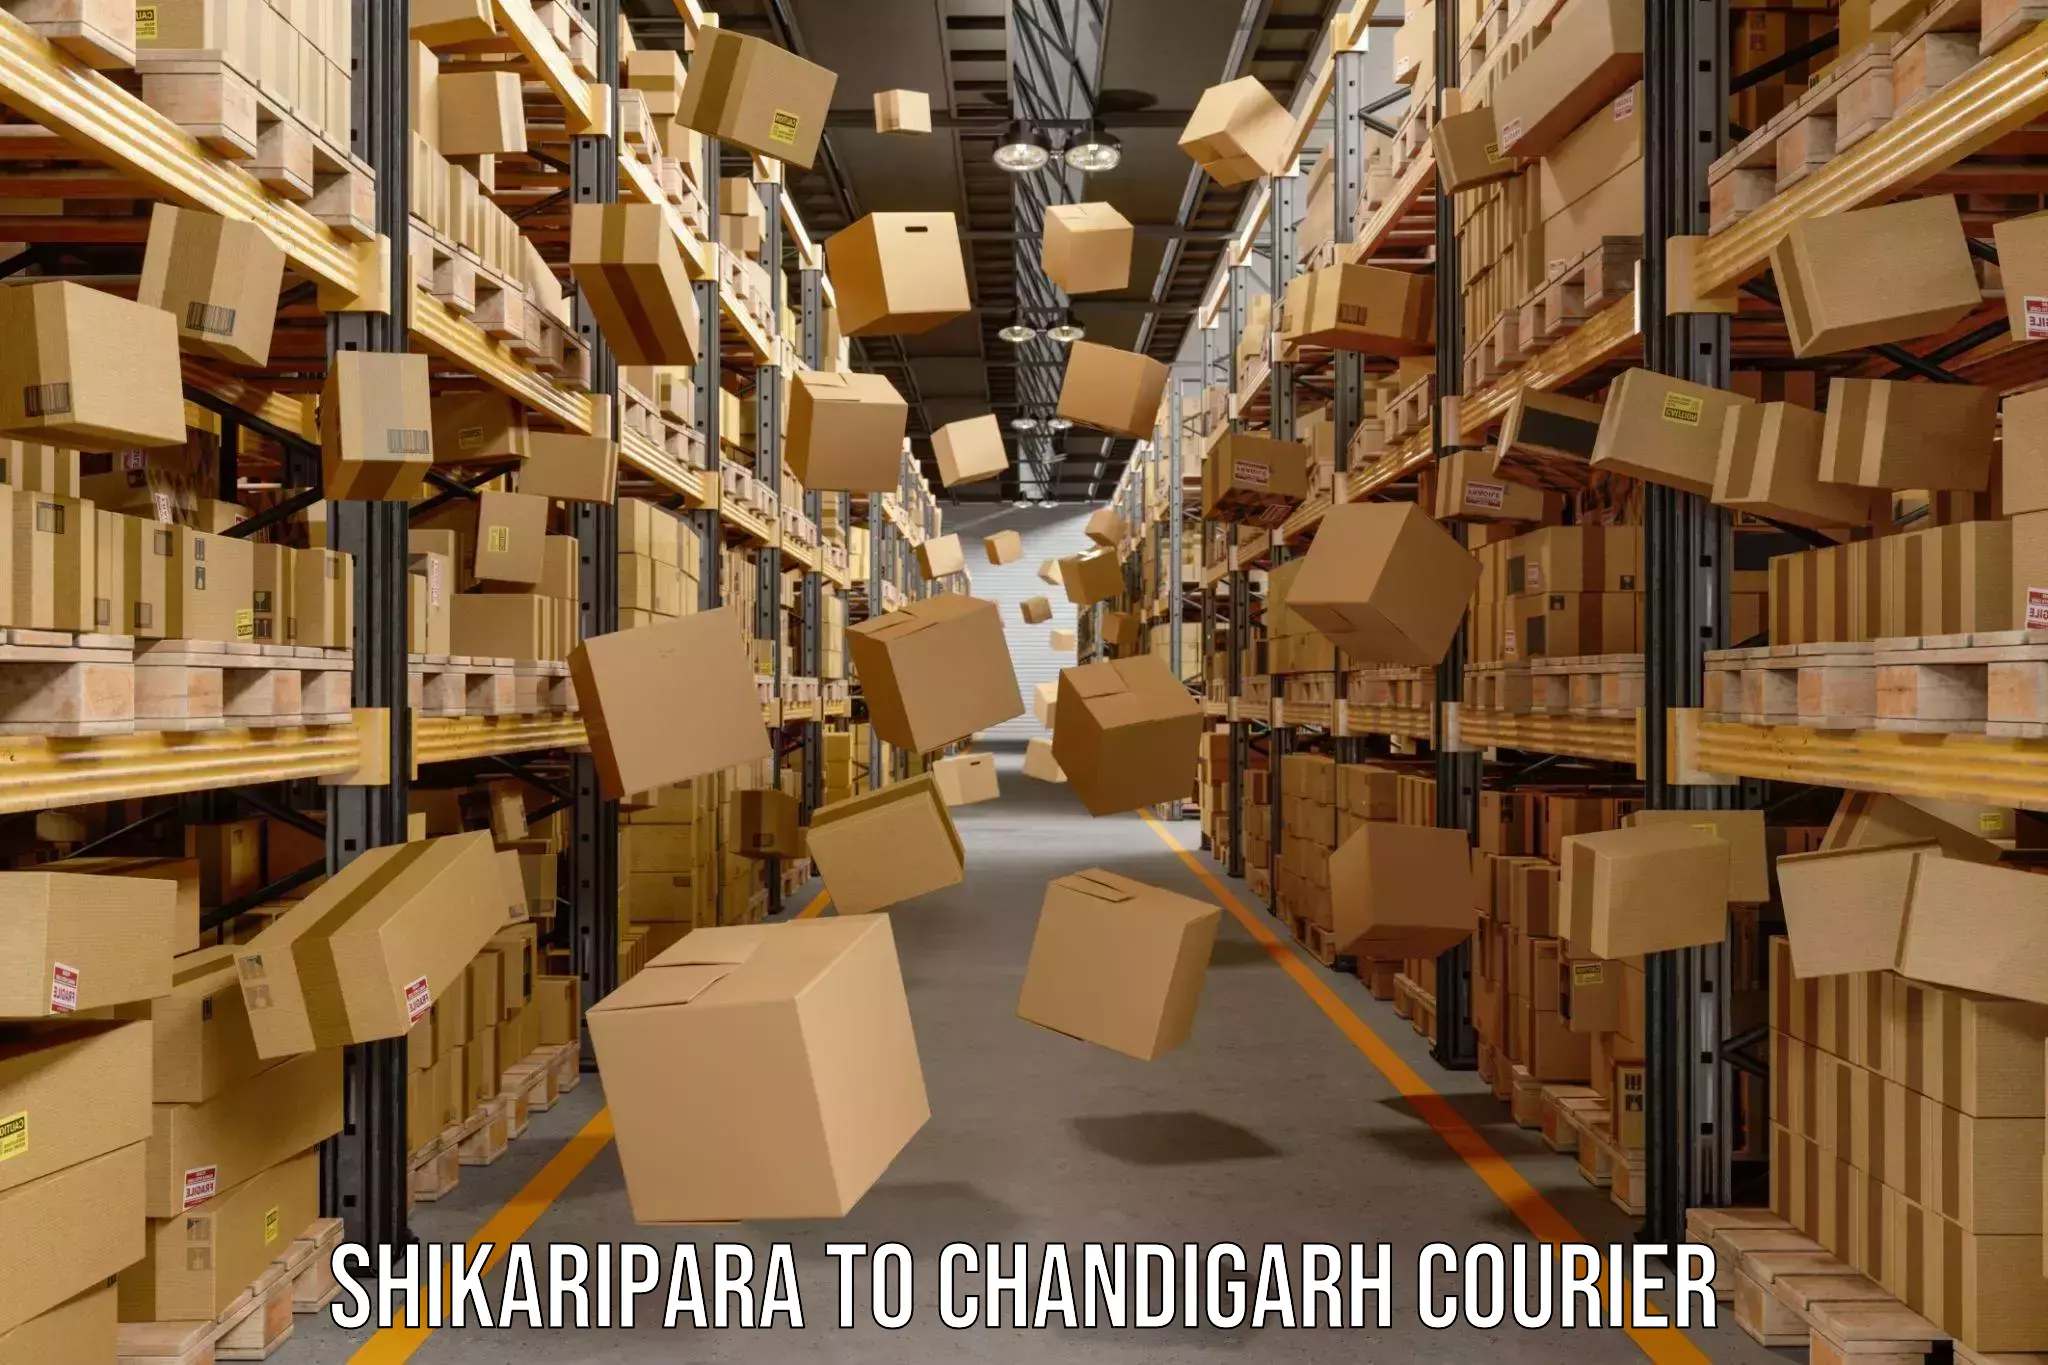 On-call courier service Shikaripara to Chandigarh